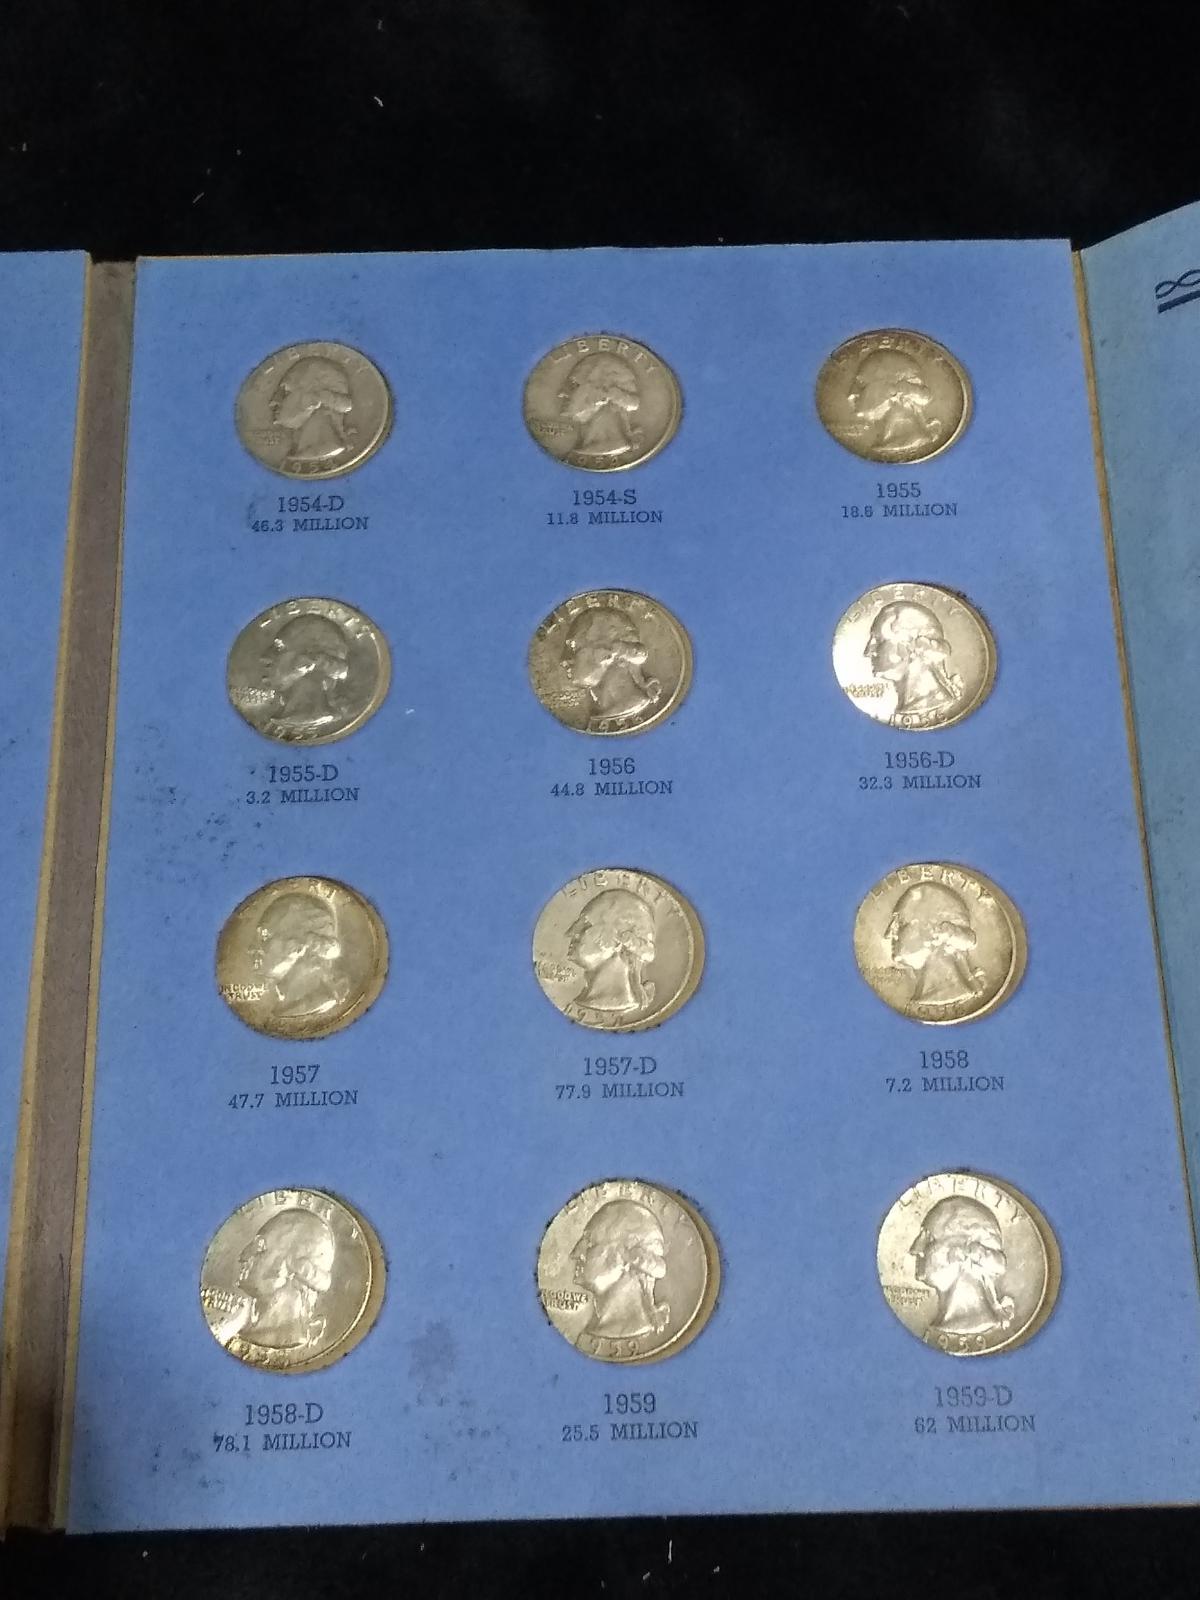 Coin-Washington Head Quarter 1946-1959 Complete